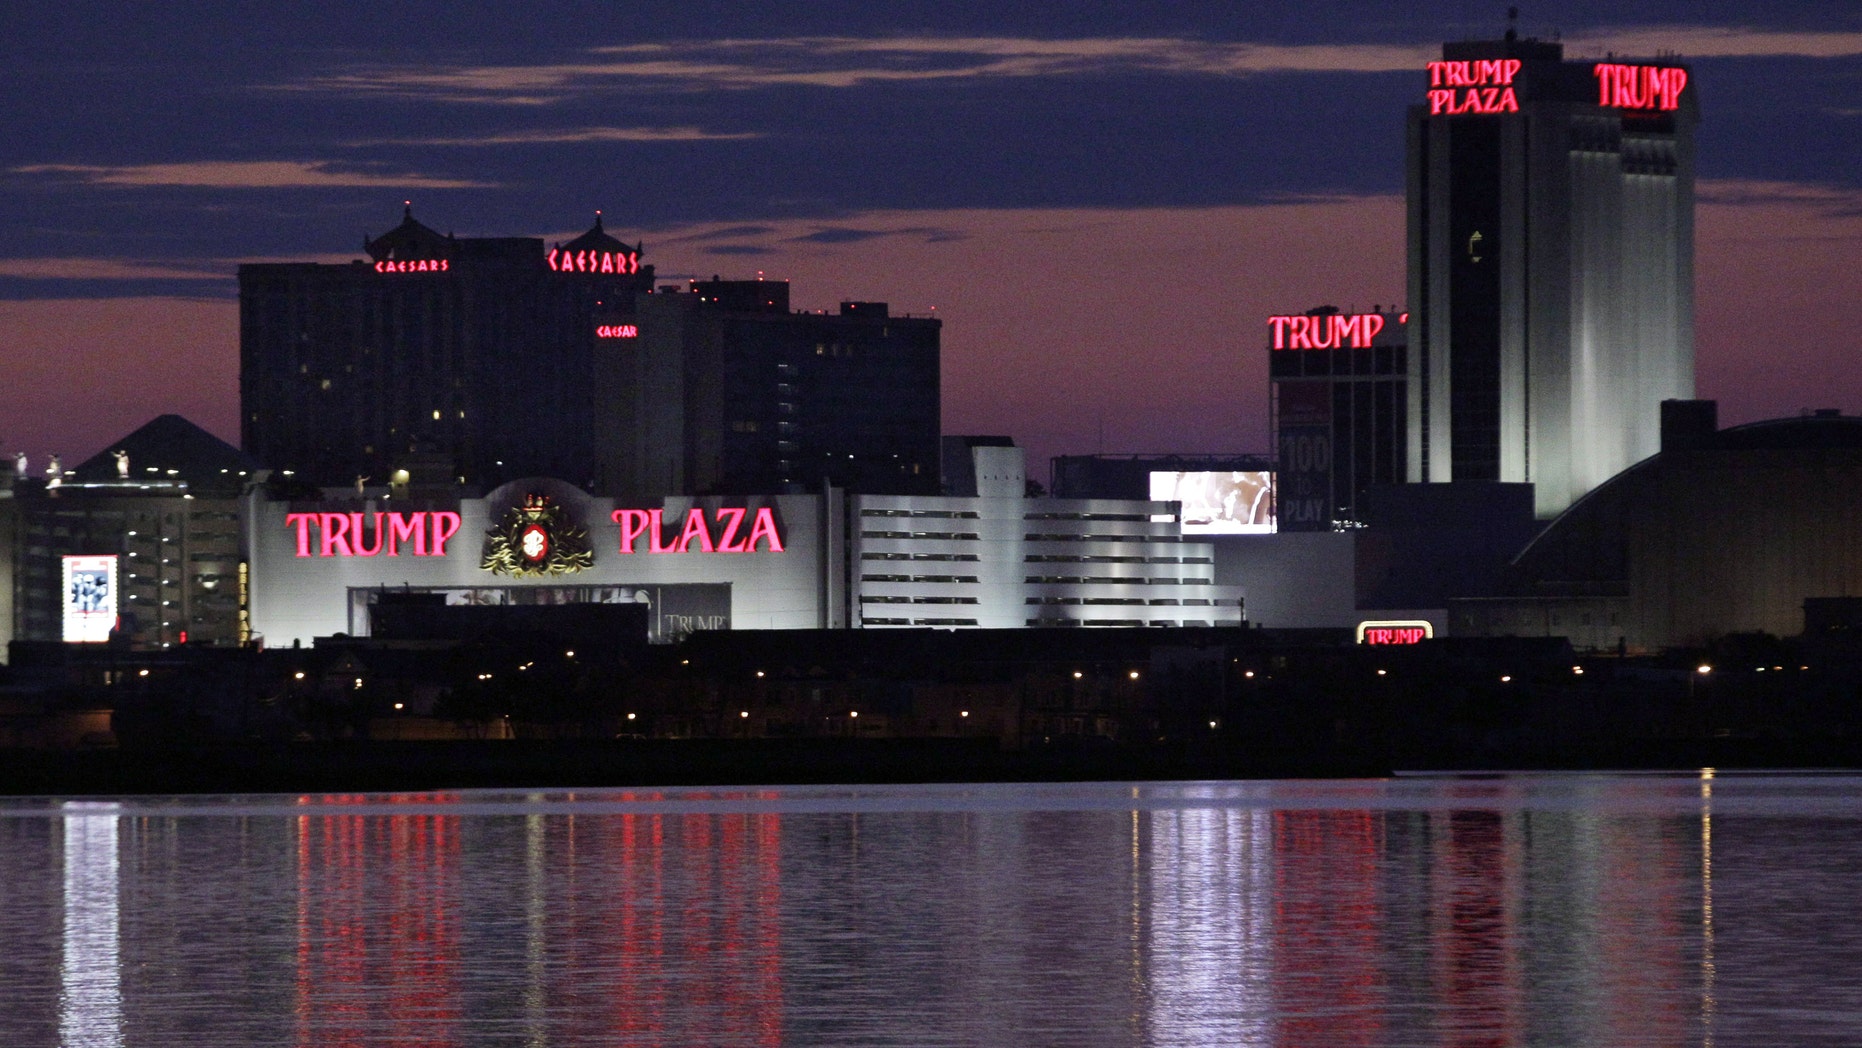 trump and atlantic city casino